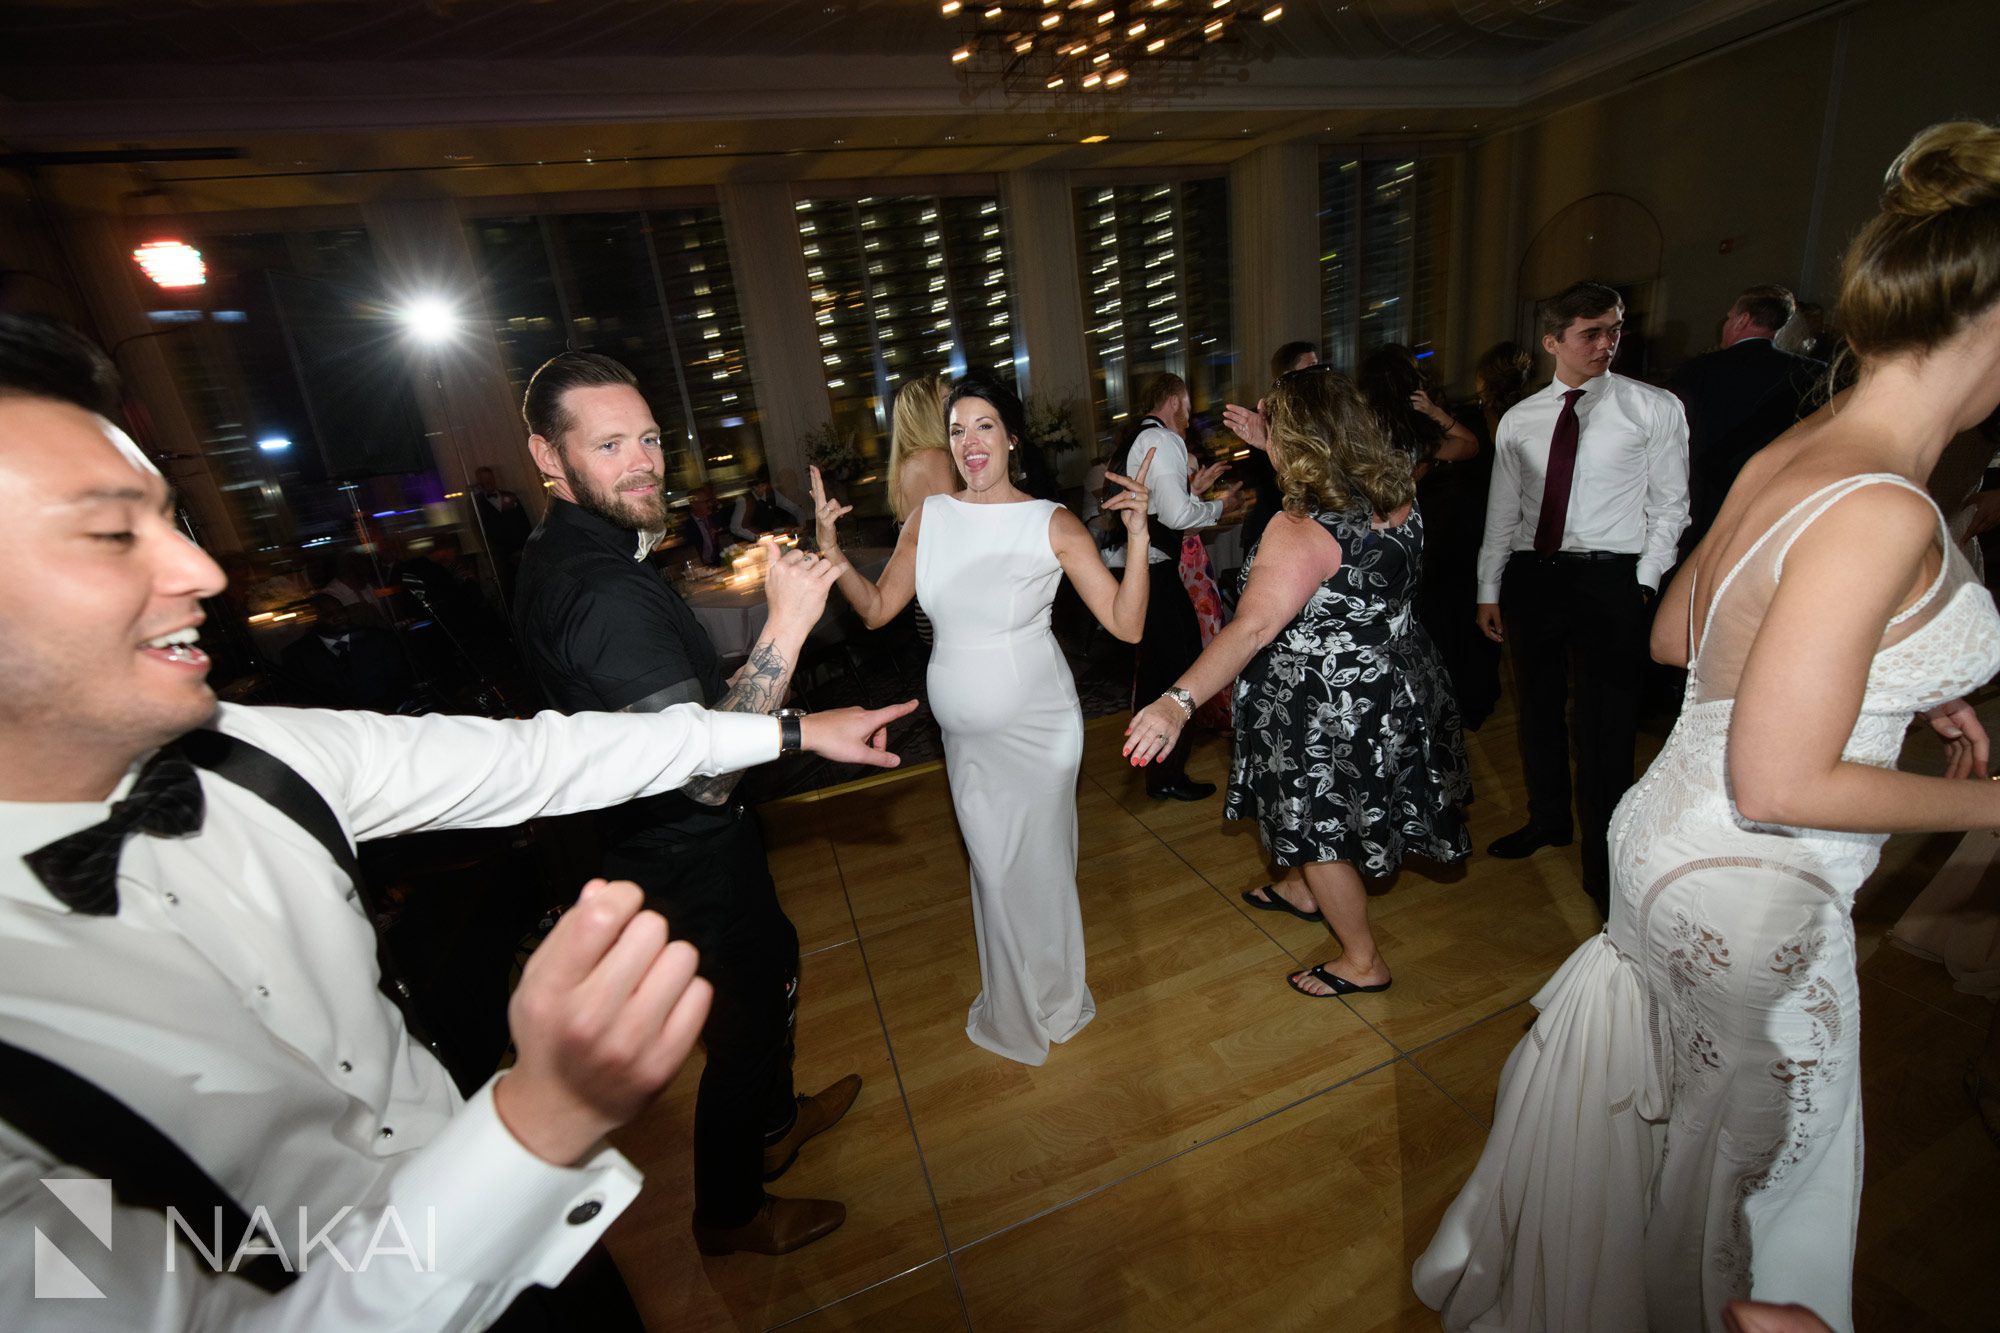 londonhouse wedding reception pictures dance